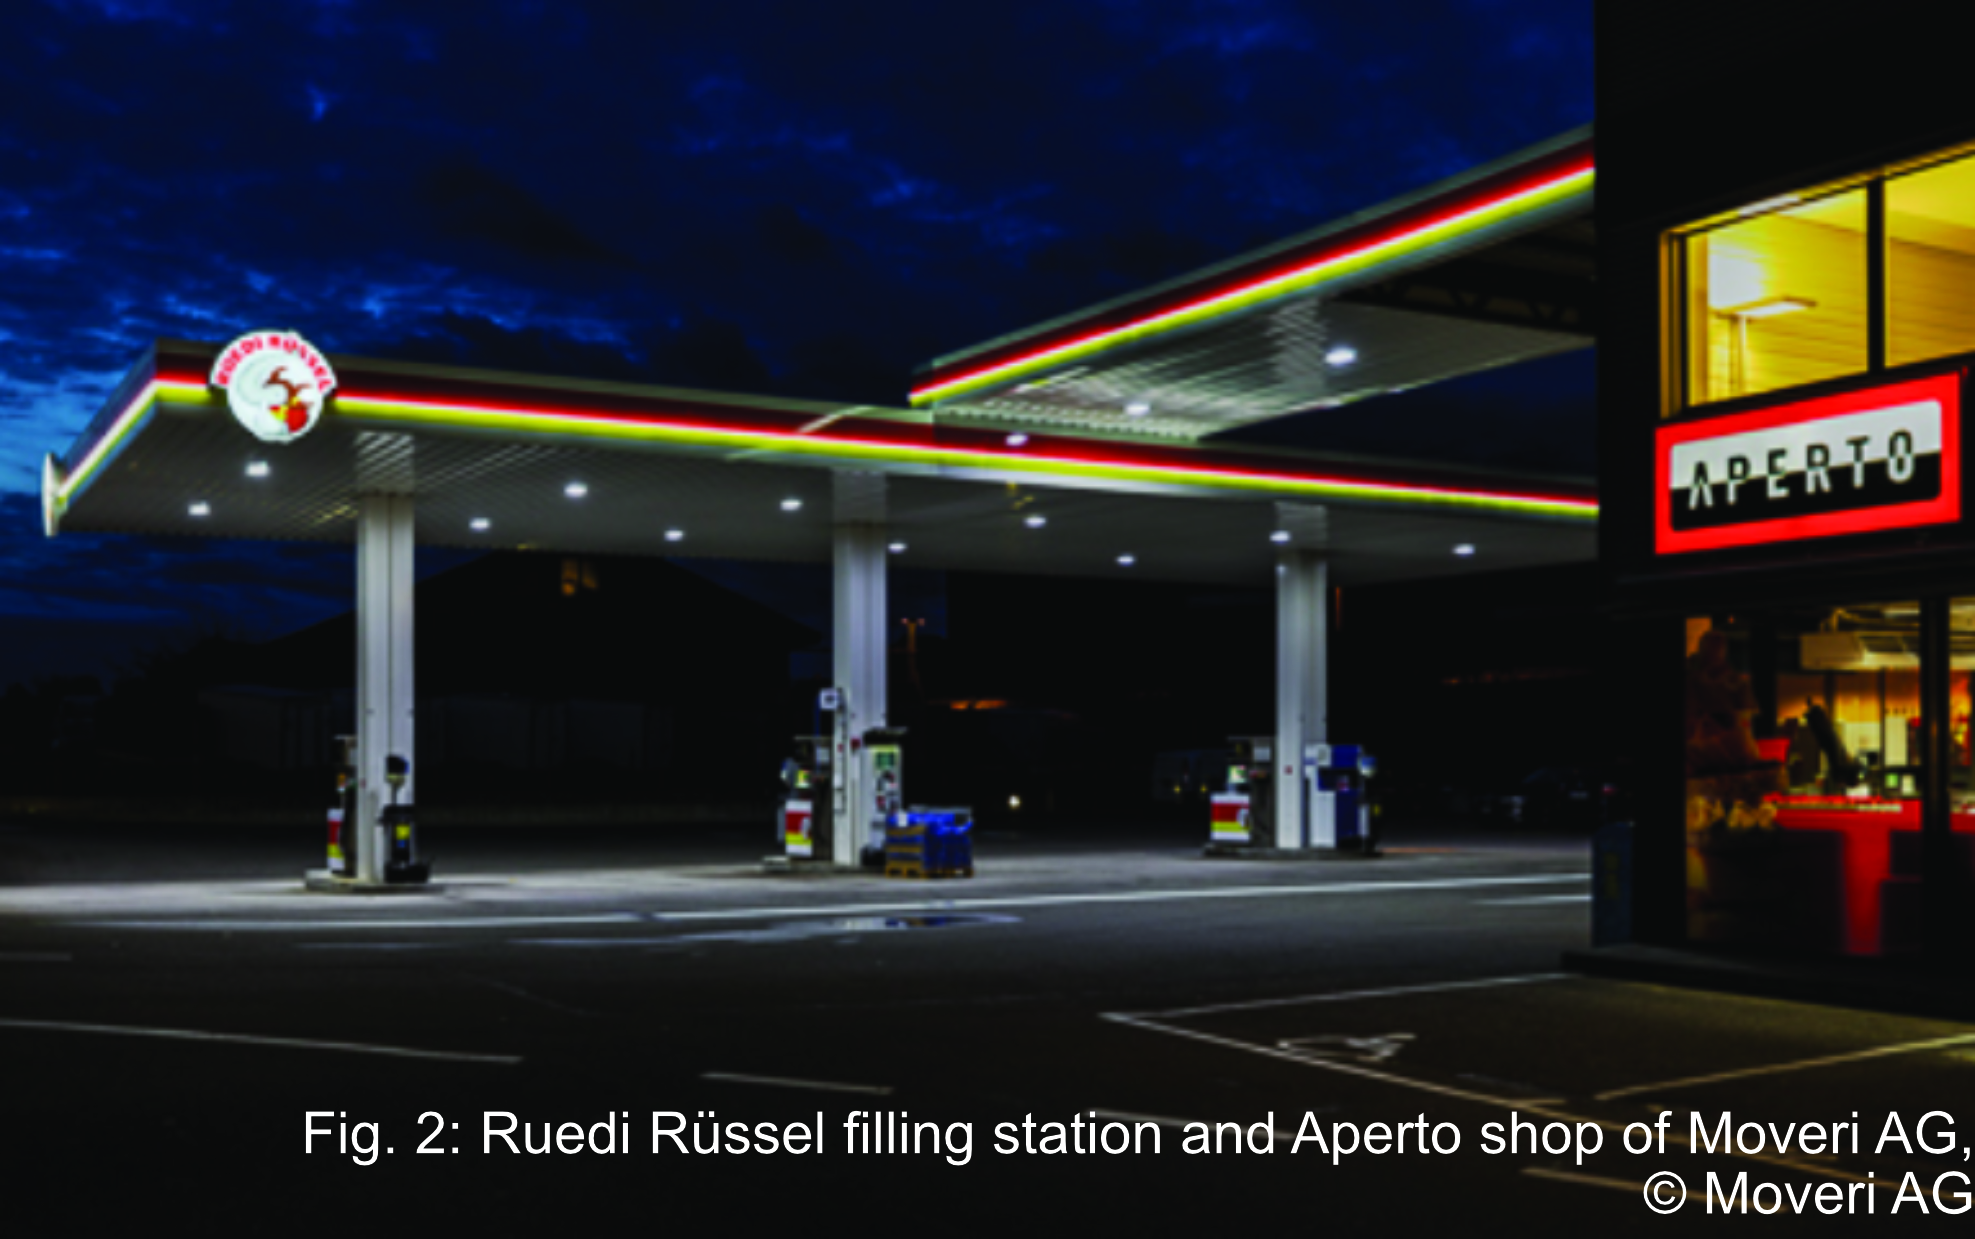 Ruedi Rüssel filling station and Aperto shop of Moveri AG